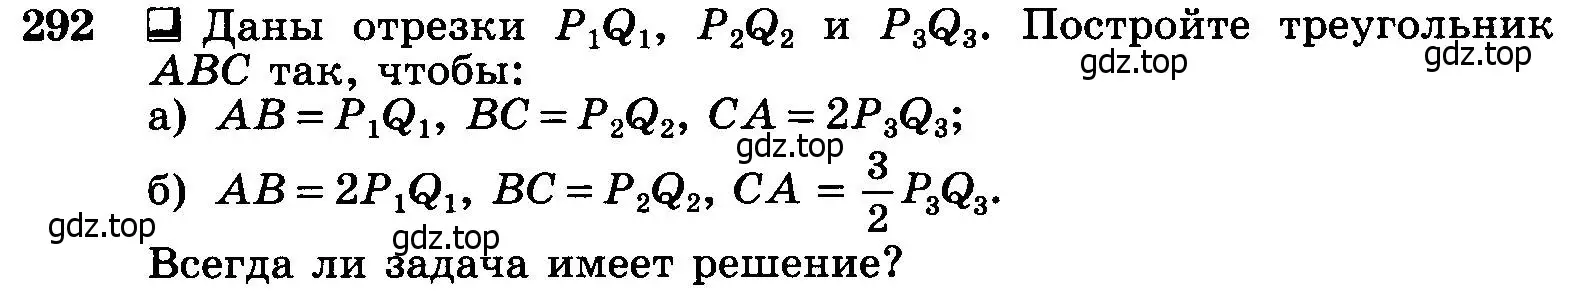 Условие номер 292 (страница 87) гдз по геометрии 7-9 класс Атанасян, Бутузов, учебник